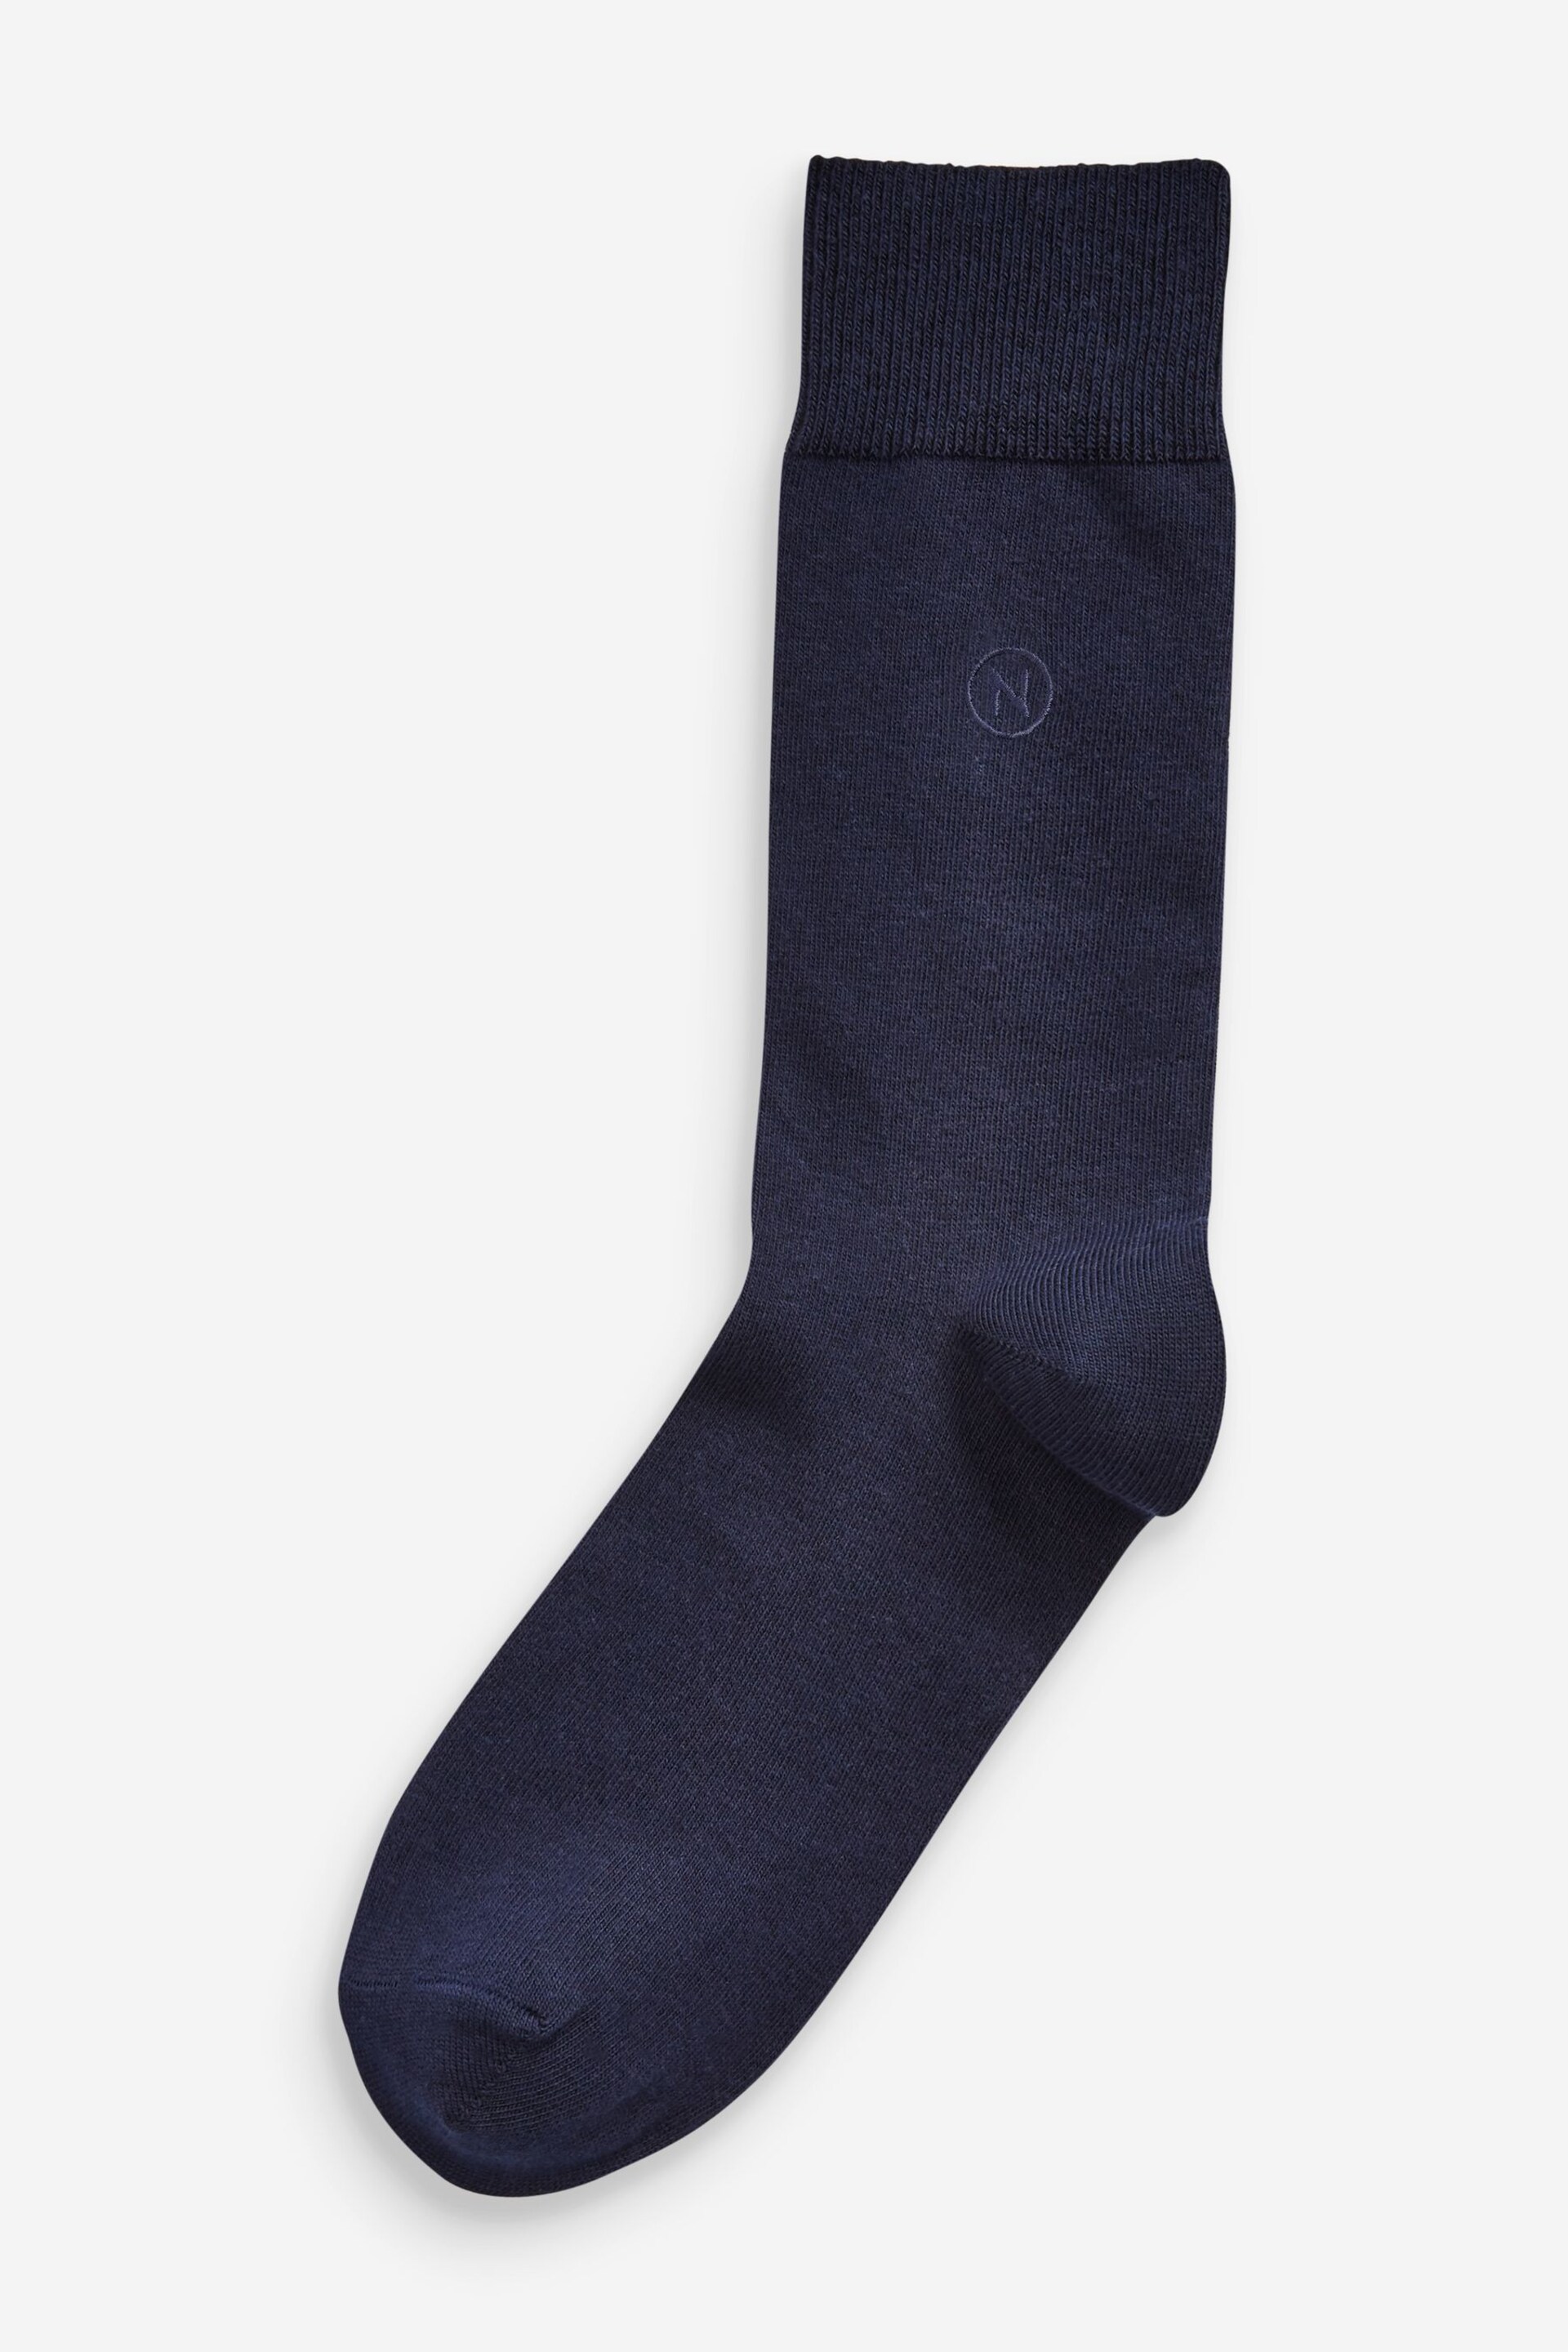 Navy Blue Logo 5 Pack Embroidered Lasting Fresh Socks - Image 3 of 4